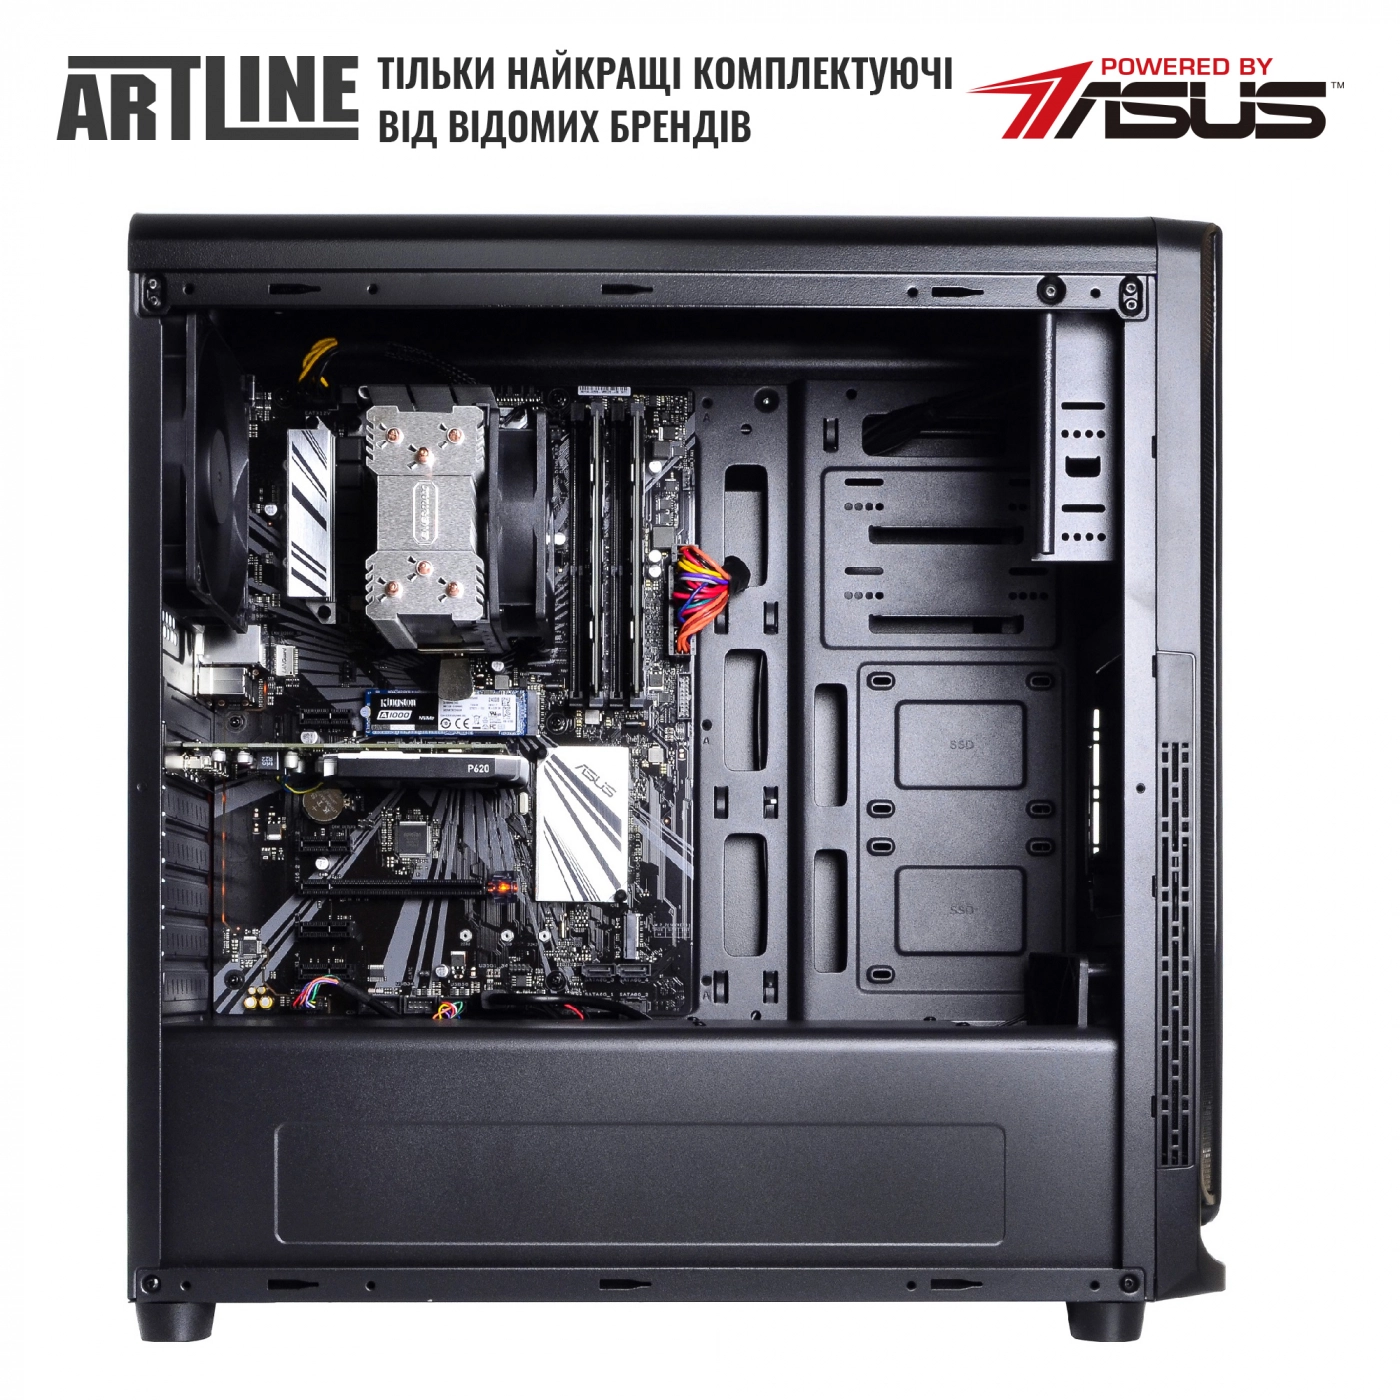 Купити Сервер ARTLINE Business T13v14 - фото 5